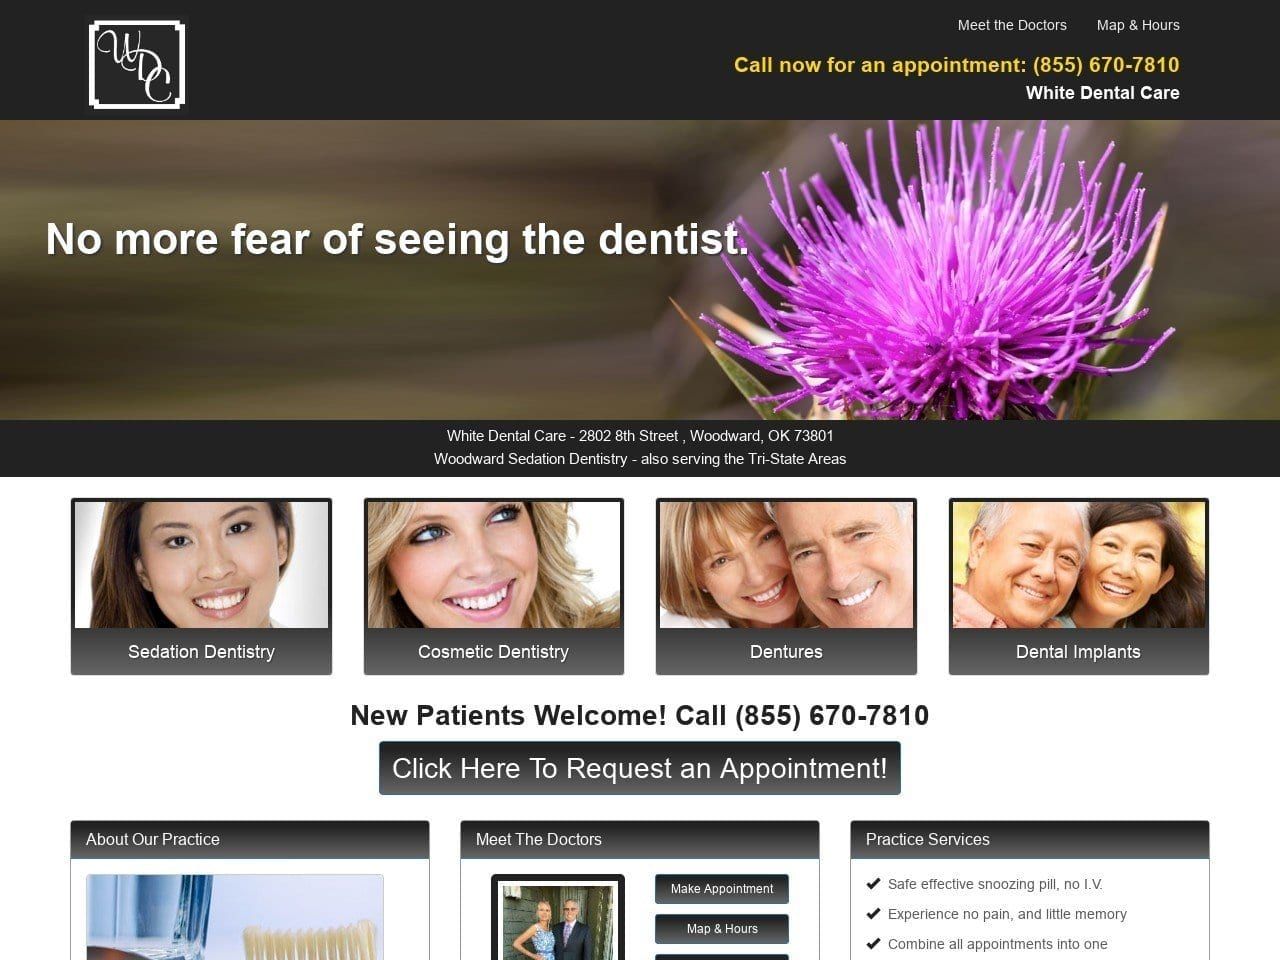 White Dental Care Website Screenshot from woodwarddentist.com